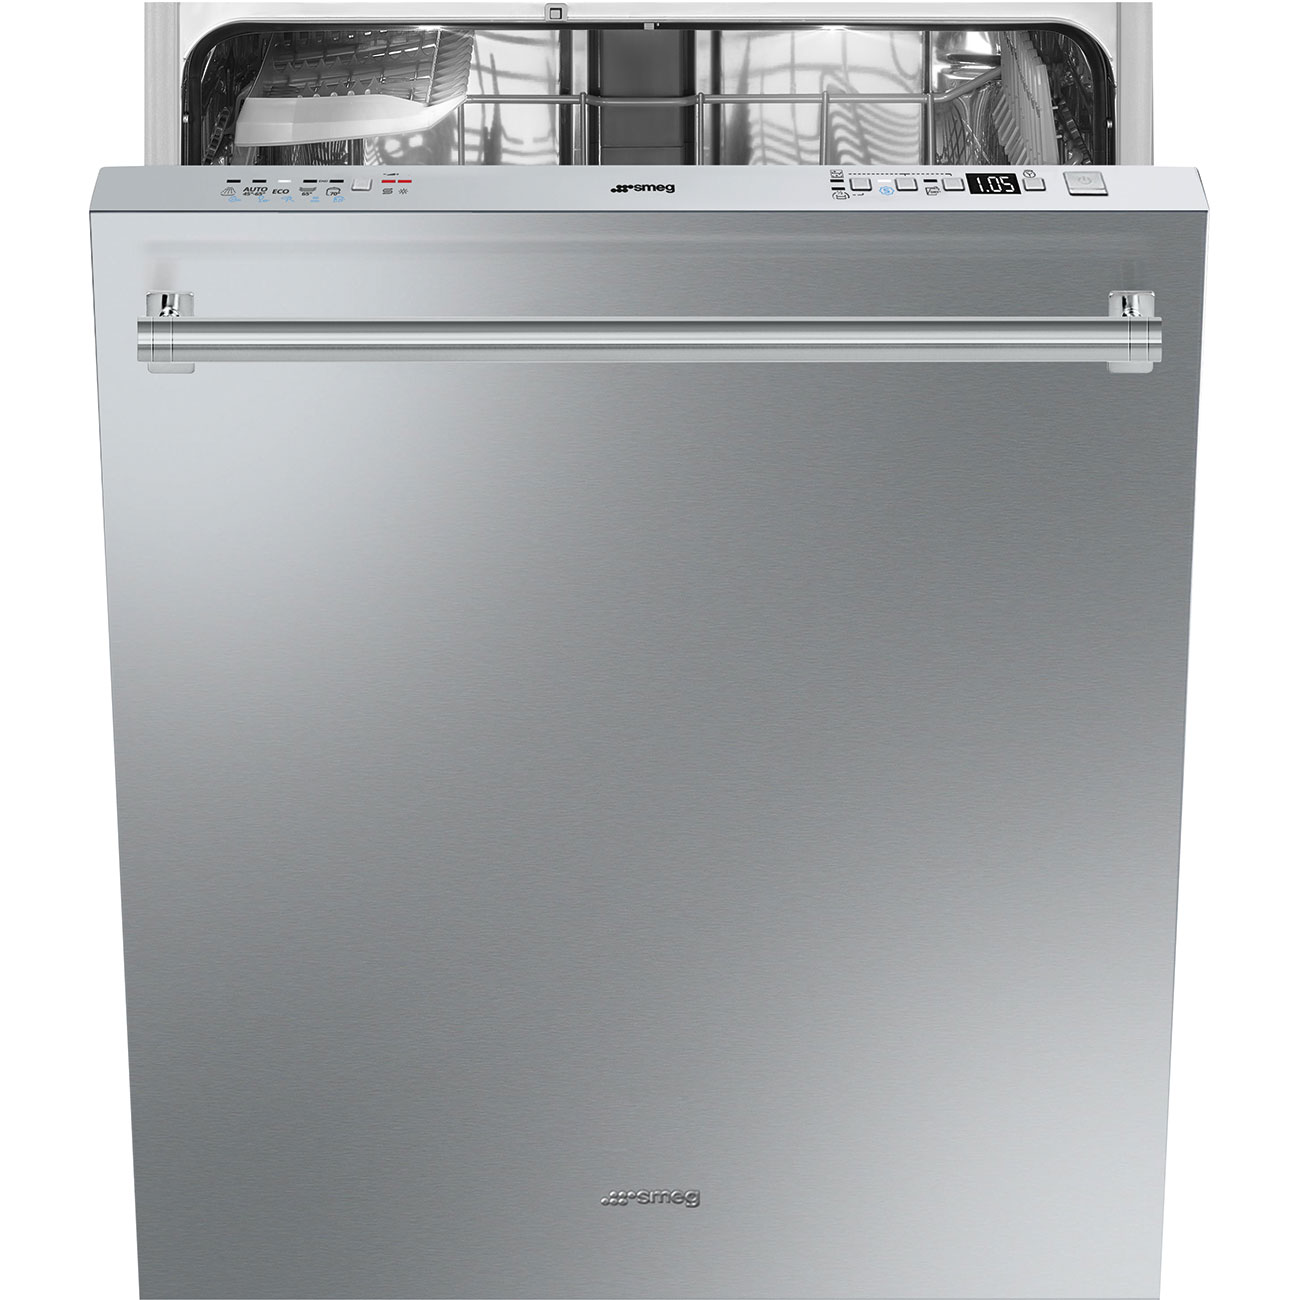 Smeg | Underbygning Opvaskemaskiner 60 cm - STX23CLLO_1